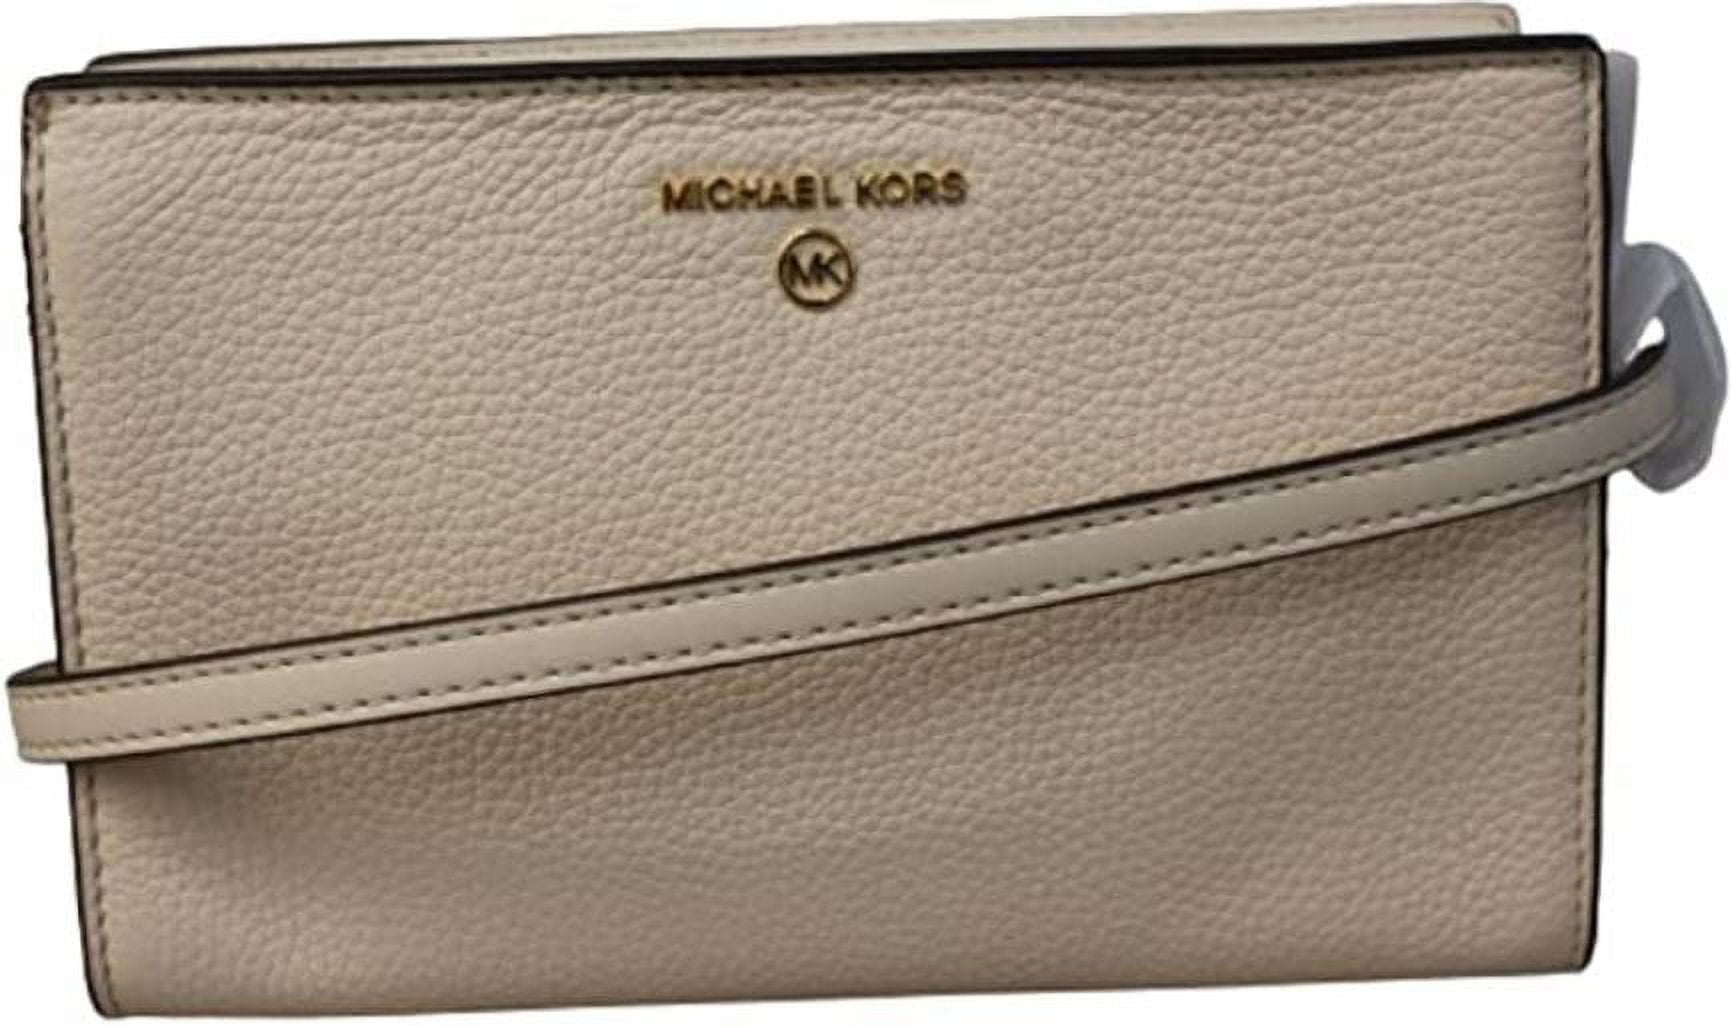 Michael Kors Emmy Saffiano Leather Medium Crossbody Bag (Luggage Saffiano)  35S9GTVC2L-230 - AllGlitters